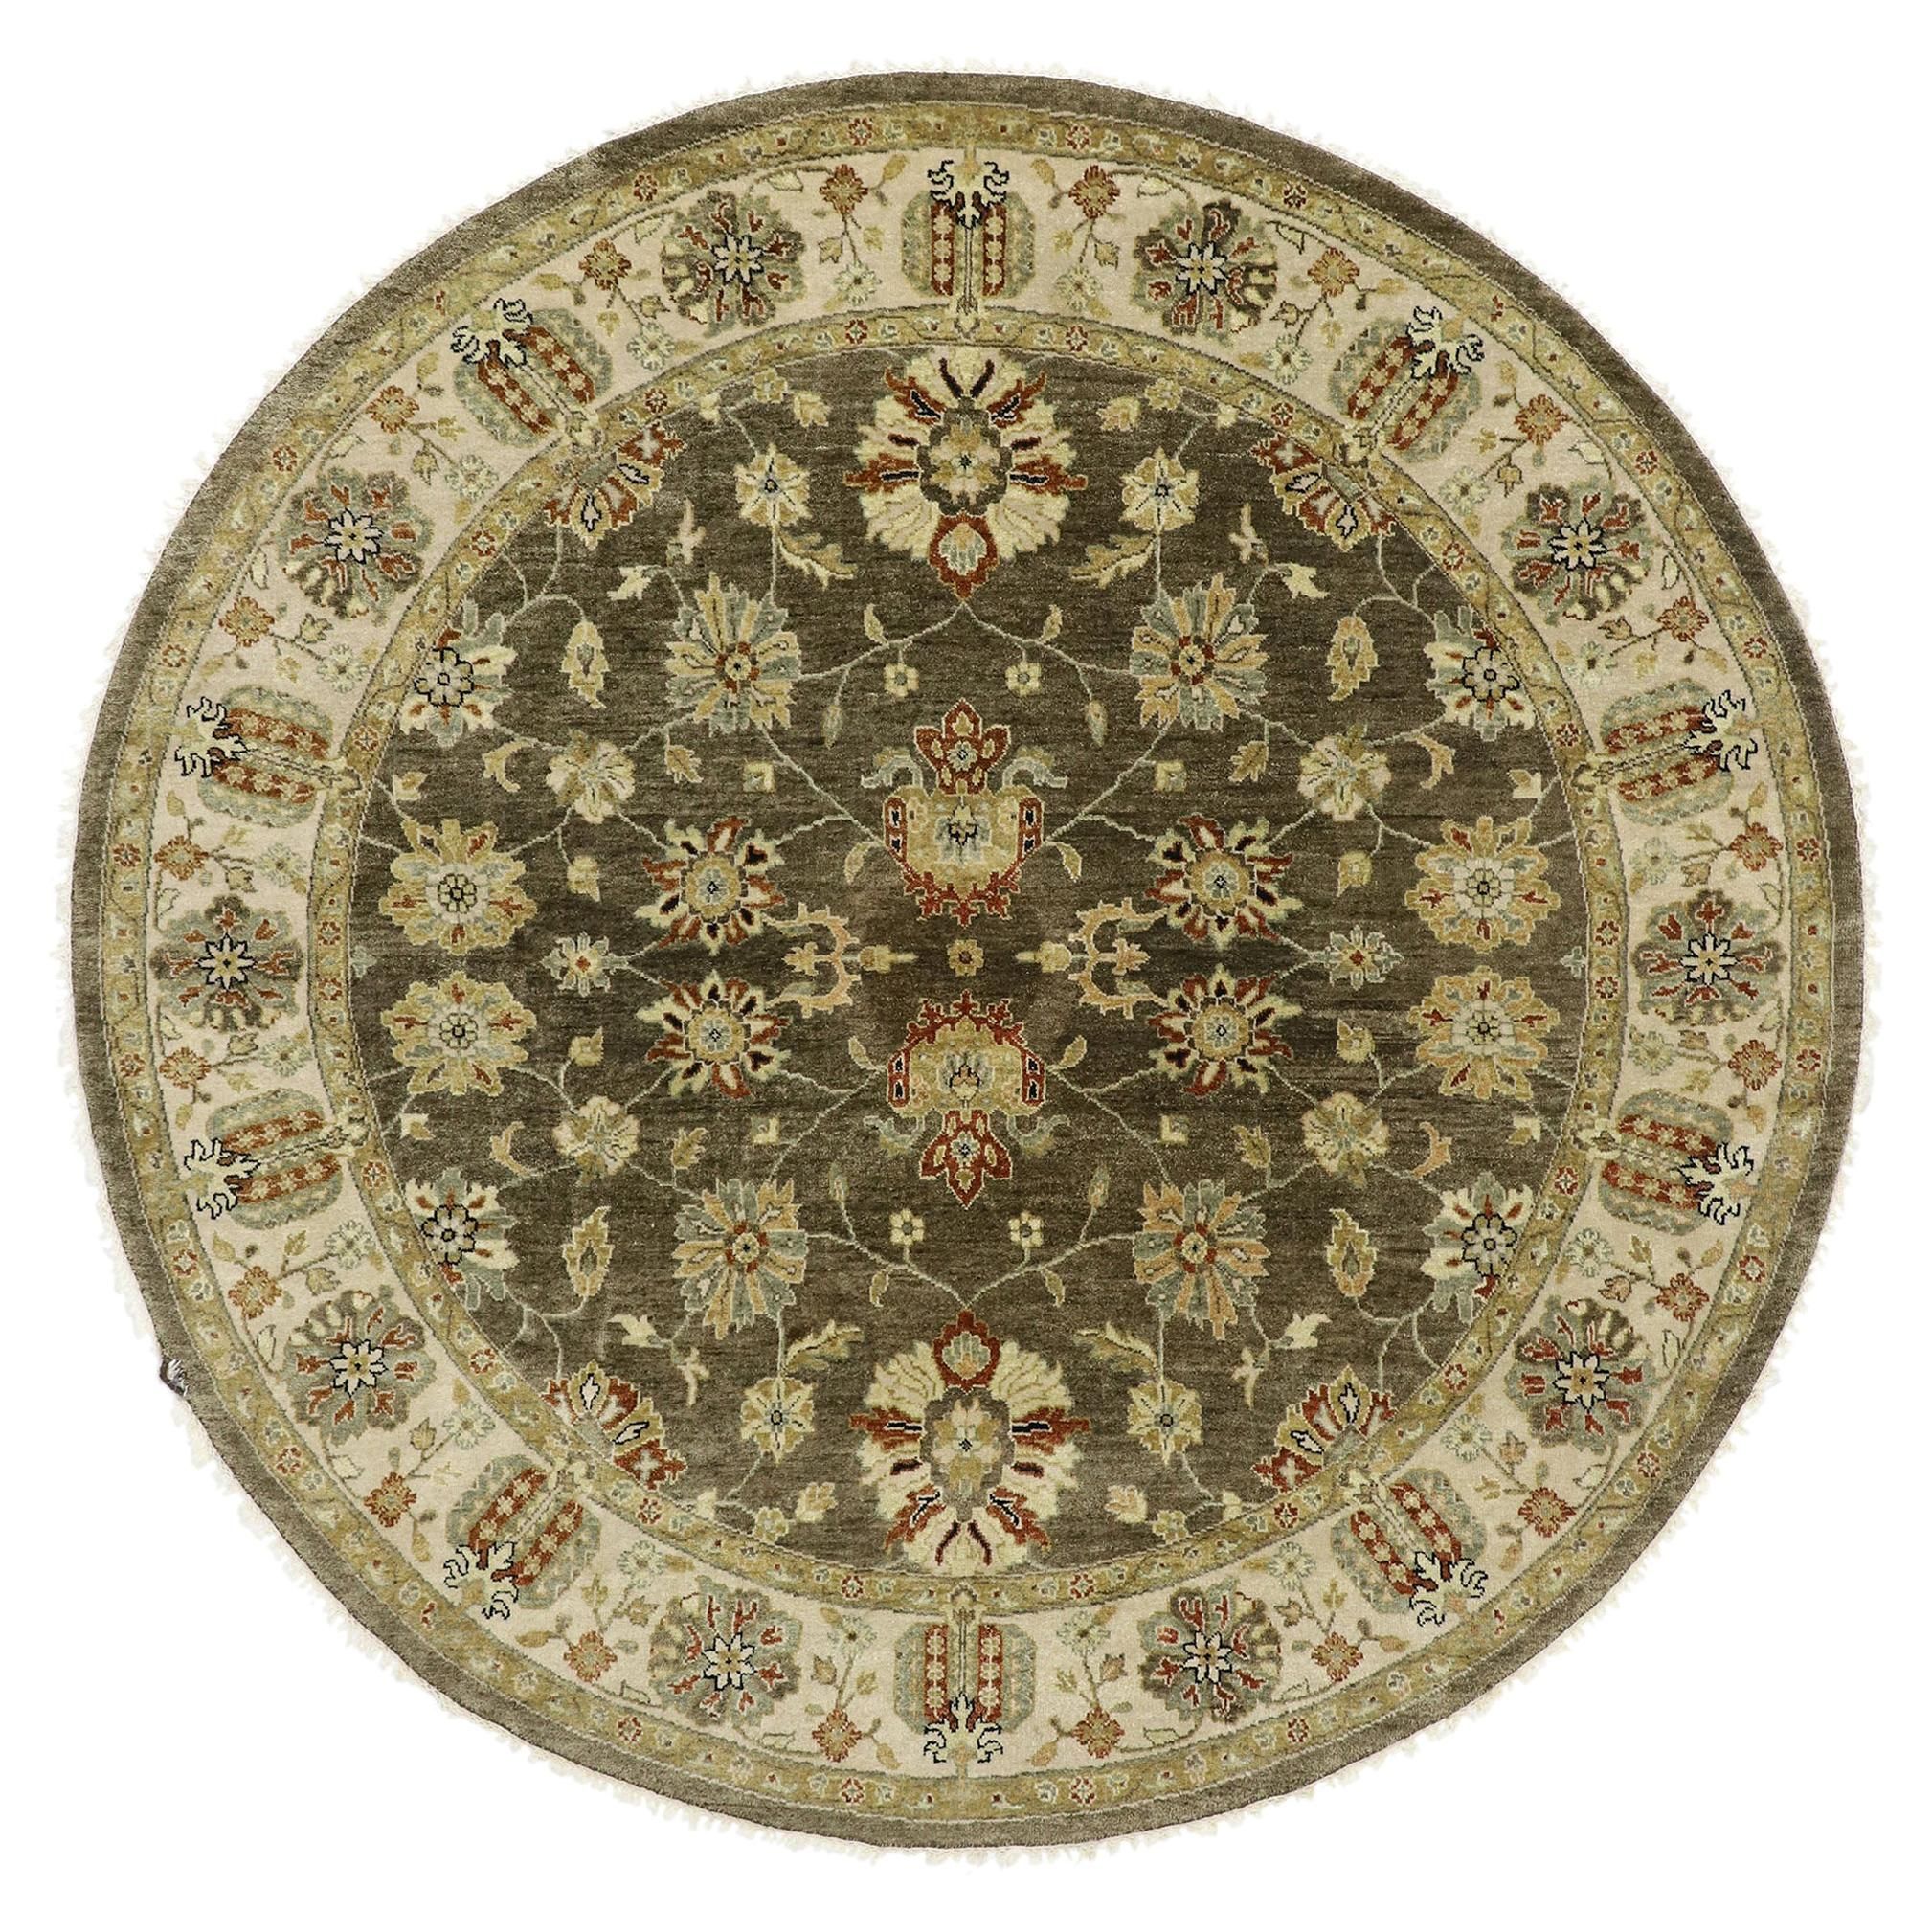 Wonderful ideas of circular rugs